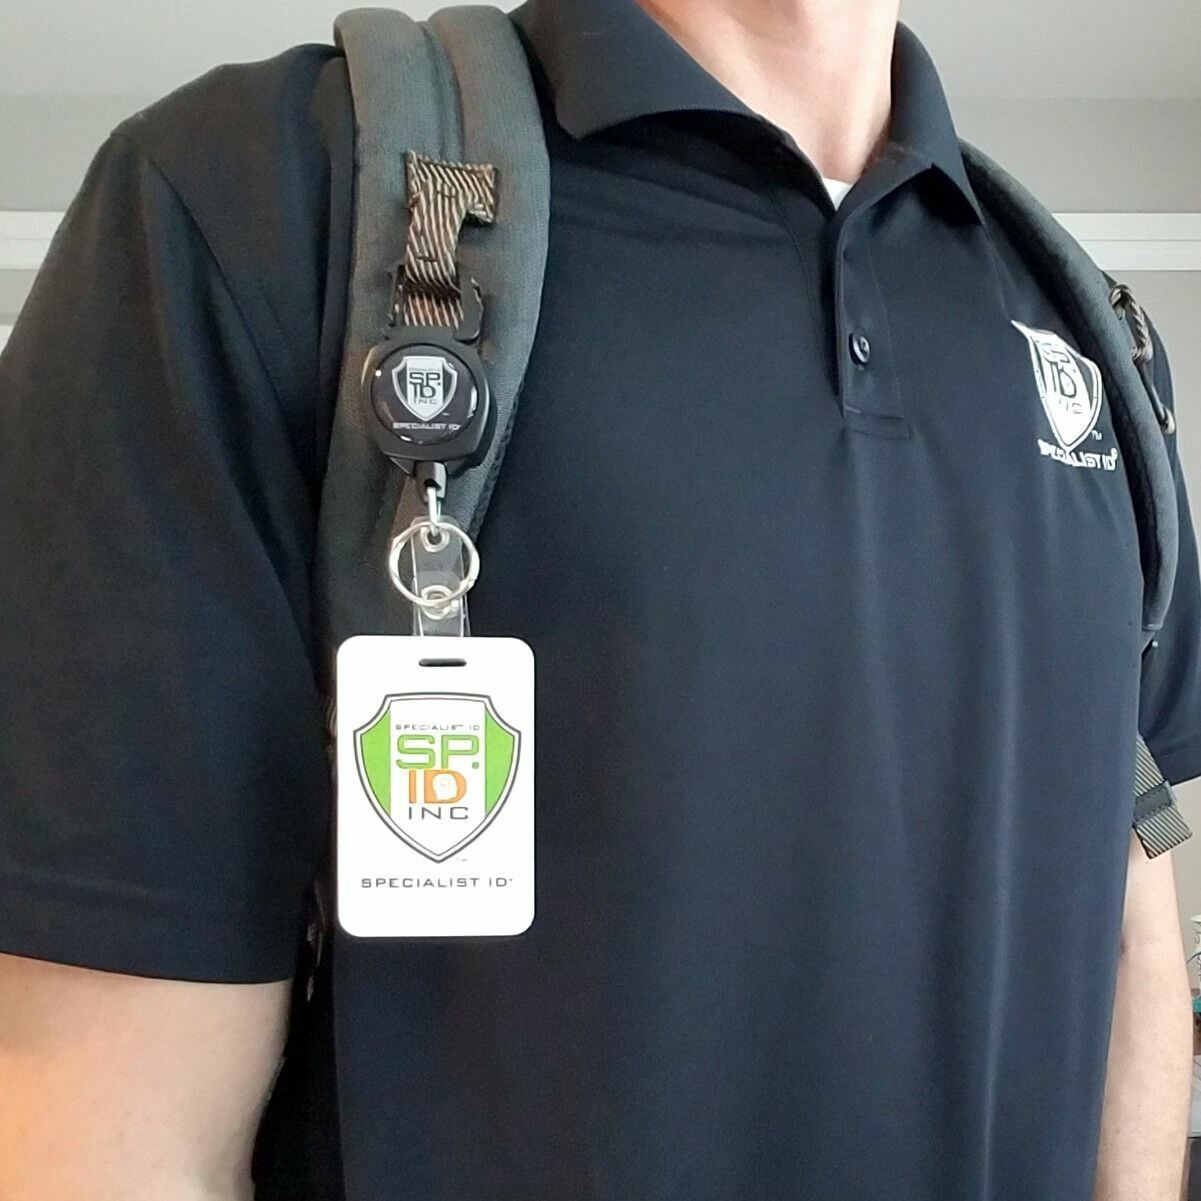 5 Heavy Duty Sidekick Badge Reels for Keys & Cards by Key Bak & Specialist ID Specialist ID SPID-3270 - фотография #8